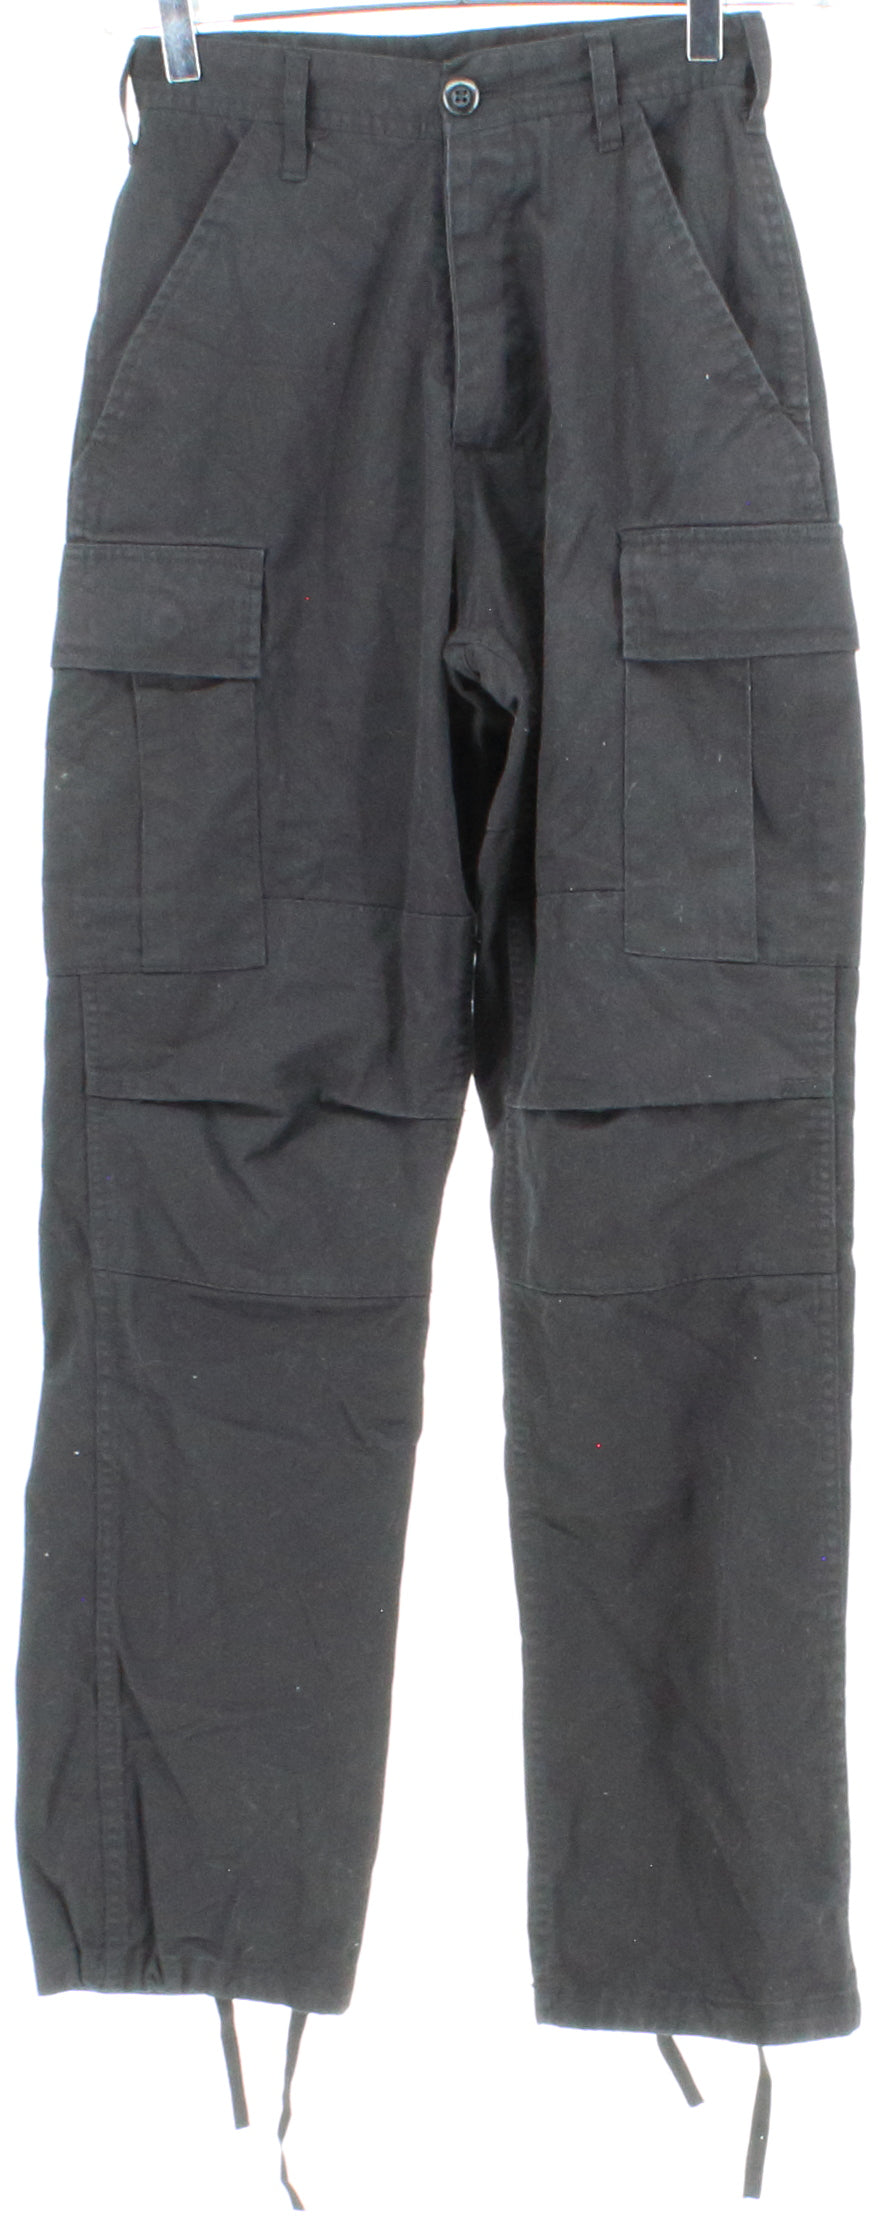 Women's Black Cargo Pants